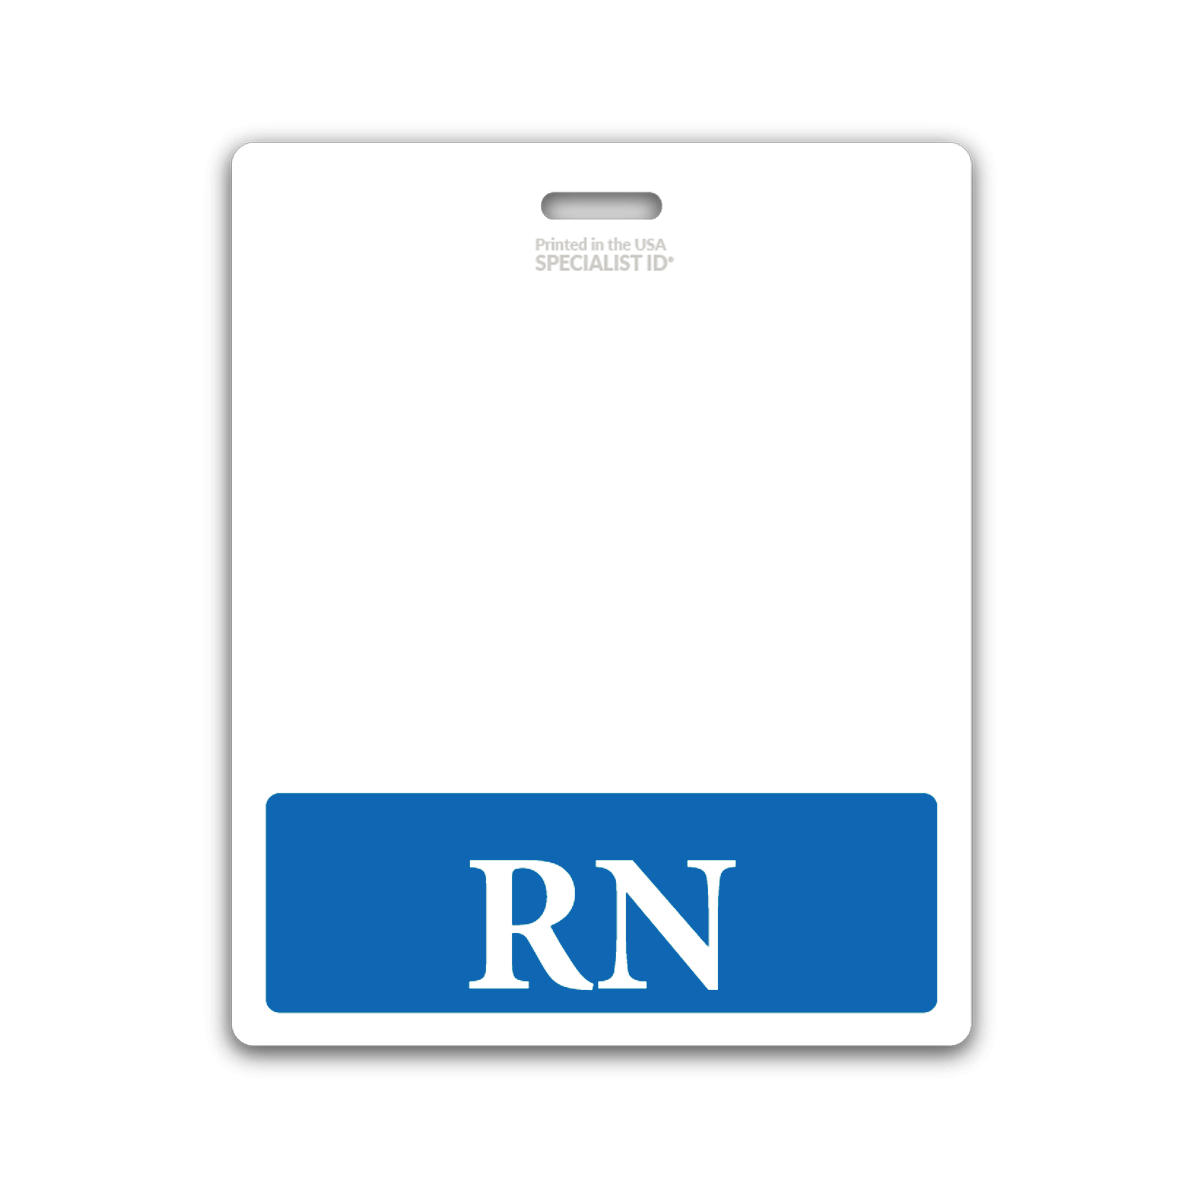 Oversized RN Badge Buddy Horizontal with Blue Border - XL ID Badge Backer for Nurses - Double Sided Print